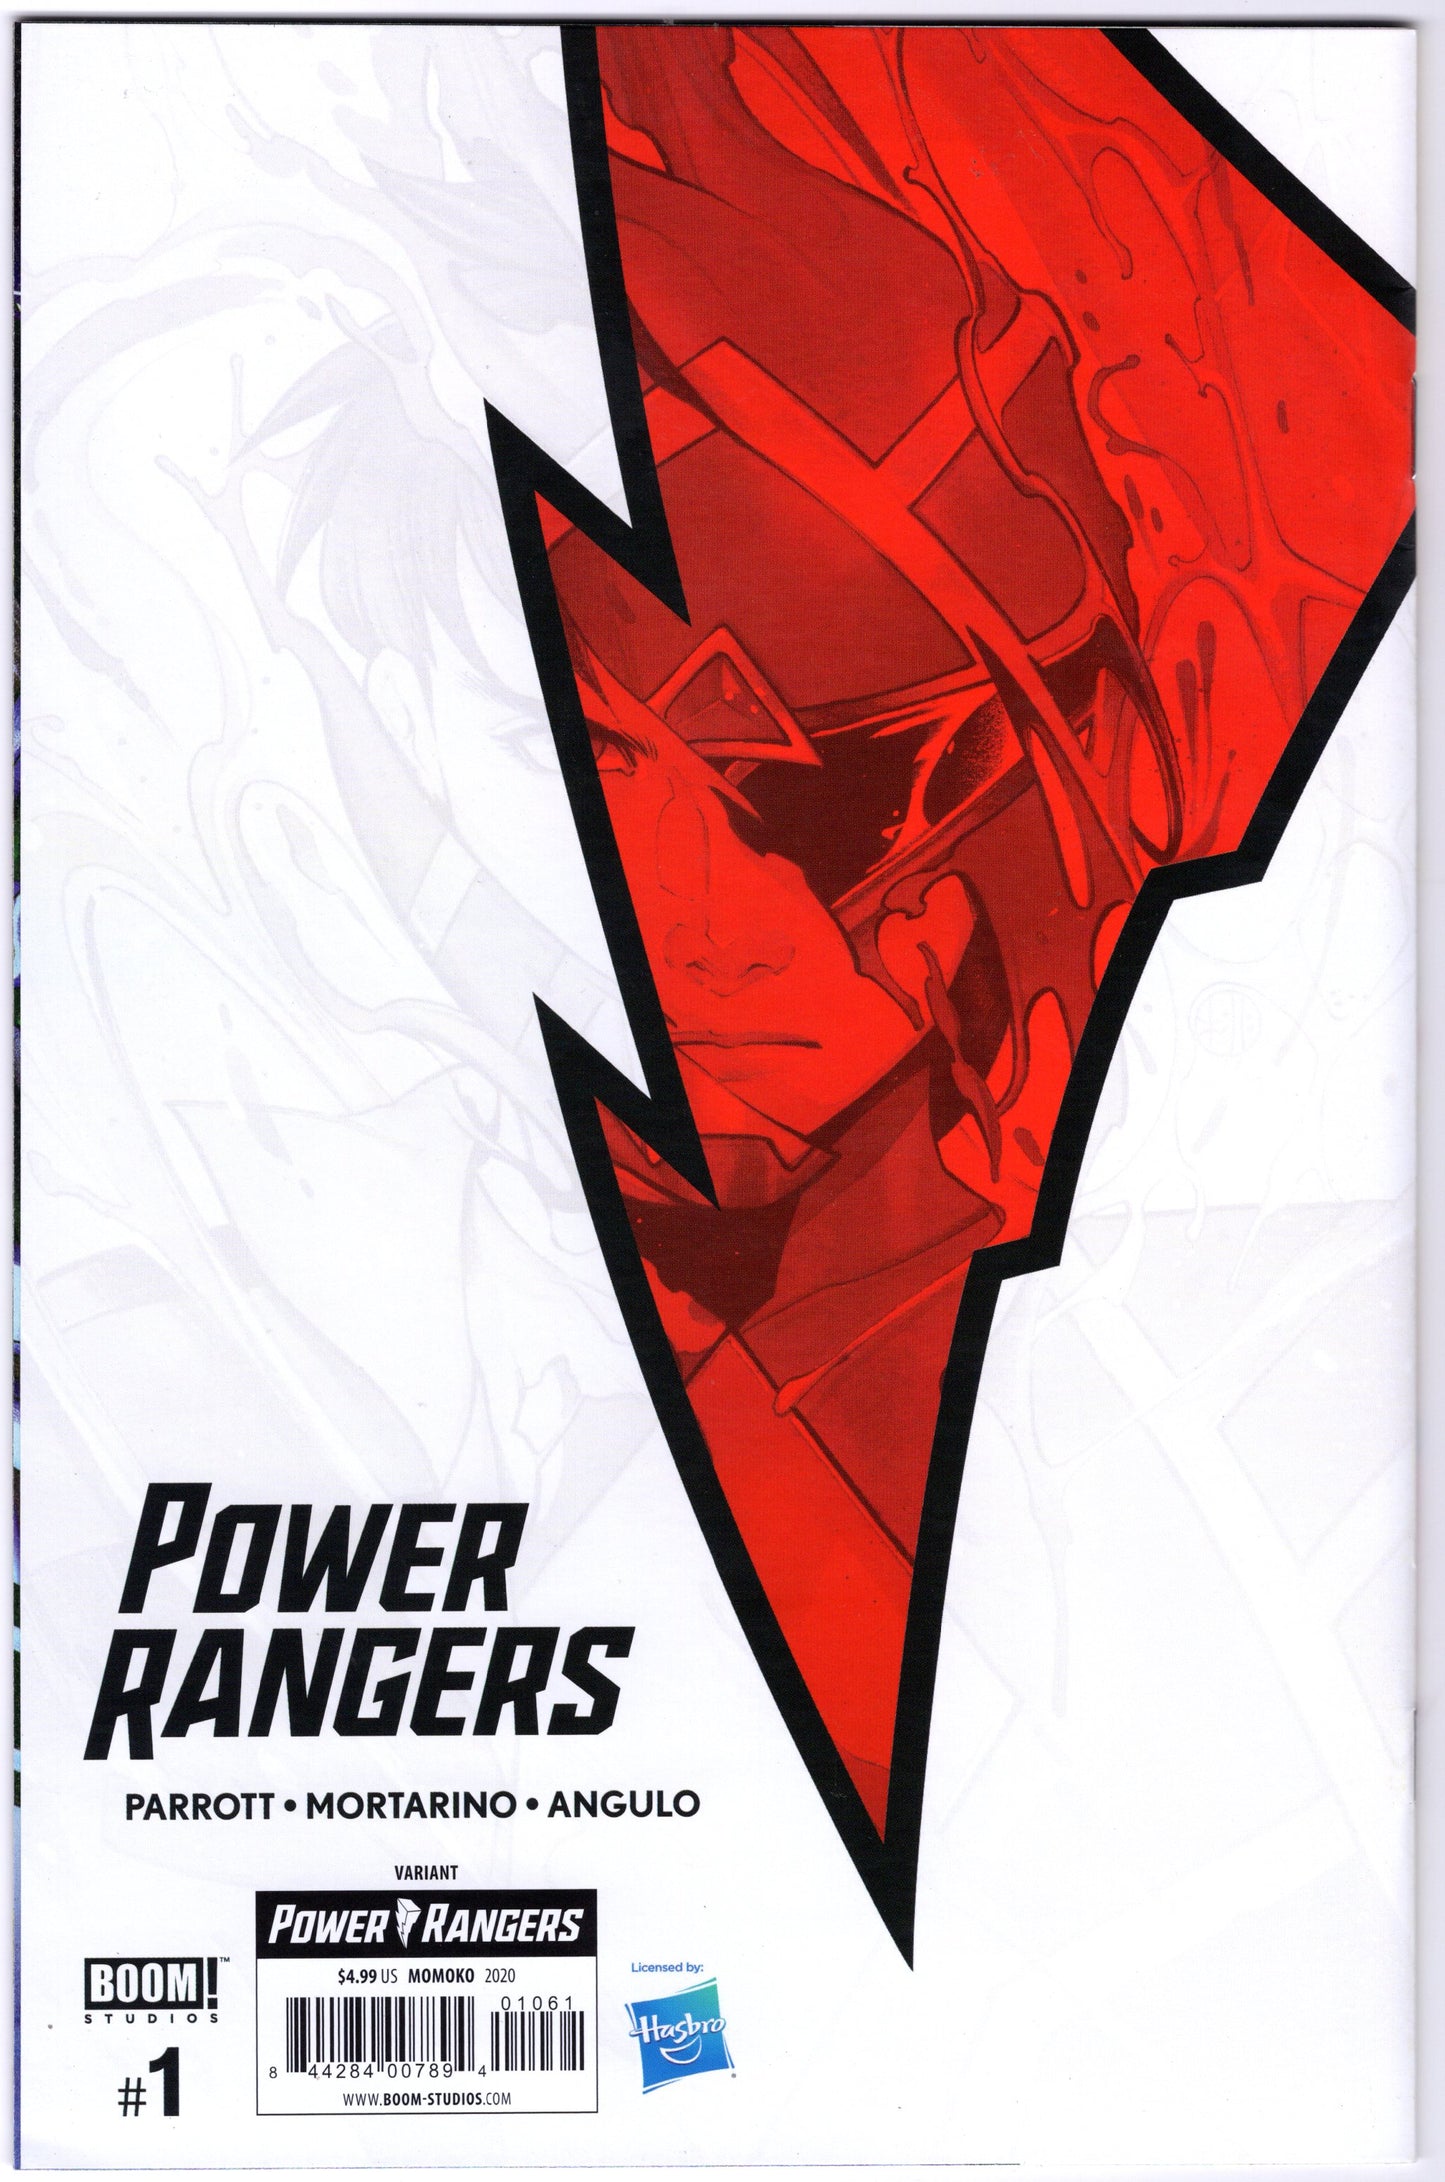 Power Rangers - Issue #1 "Peach Momoko 1:25 Variant" (Nov. 2020 - Boom! Studios) NM-